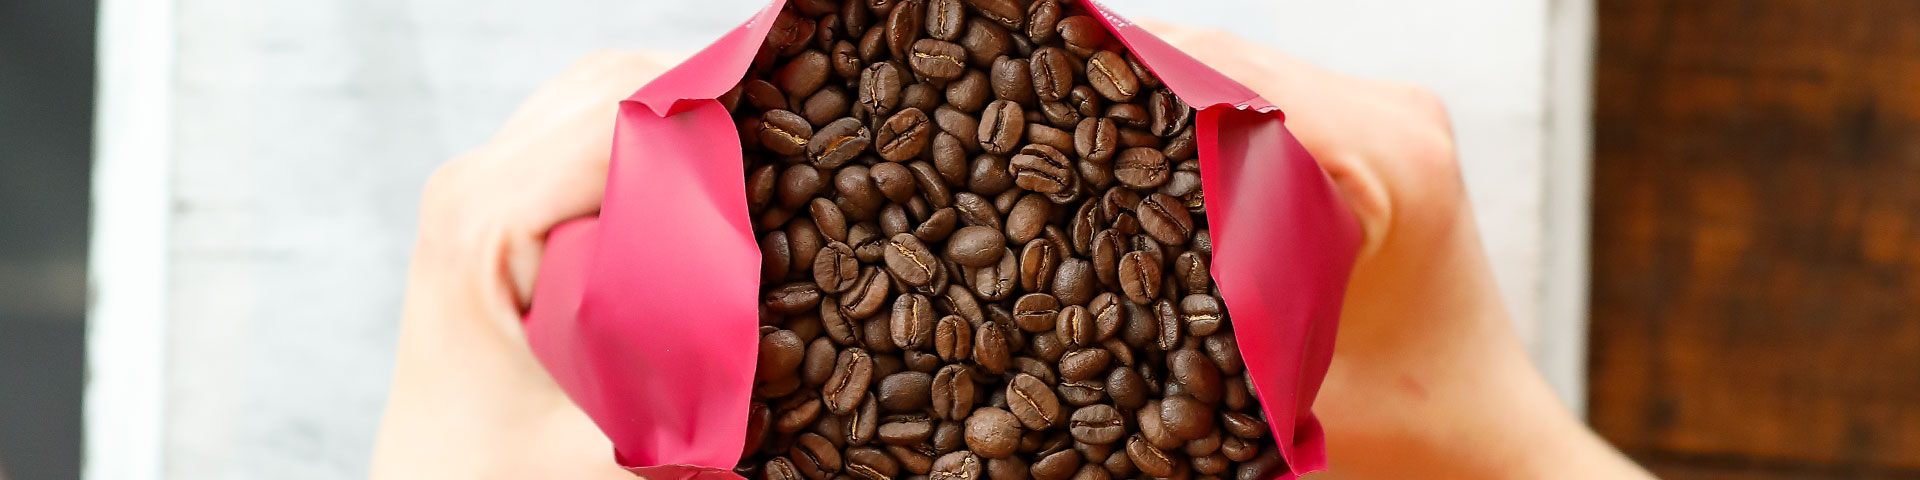 Kaffee & Espresso - Kaffee online kaufen